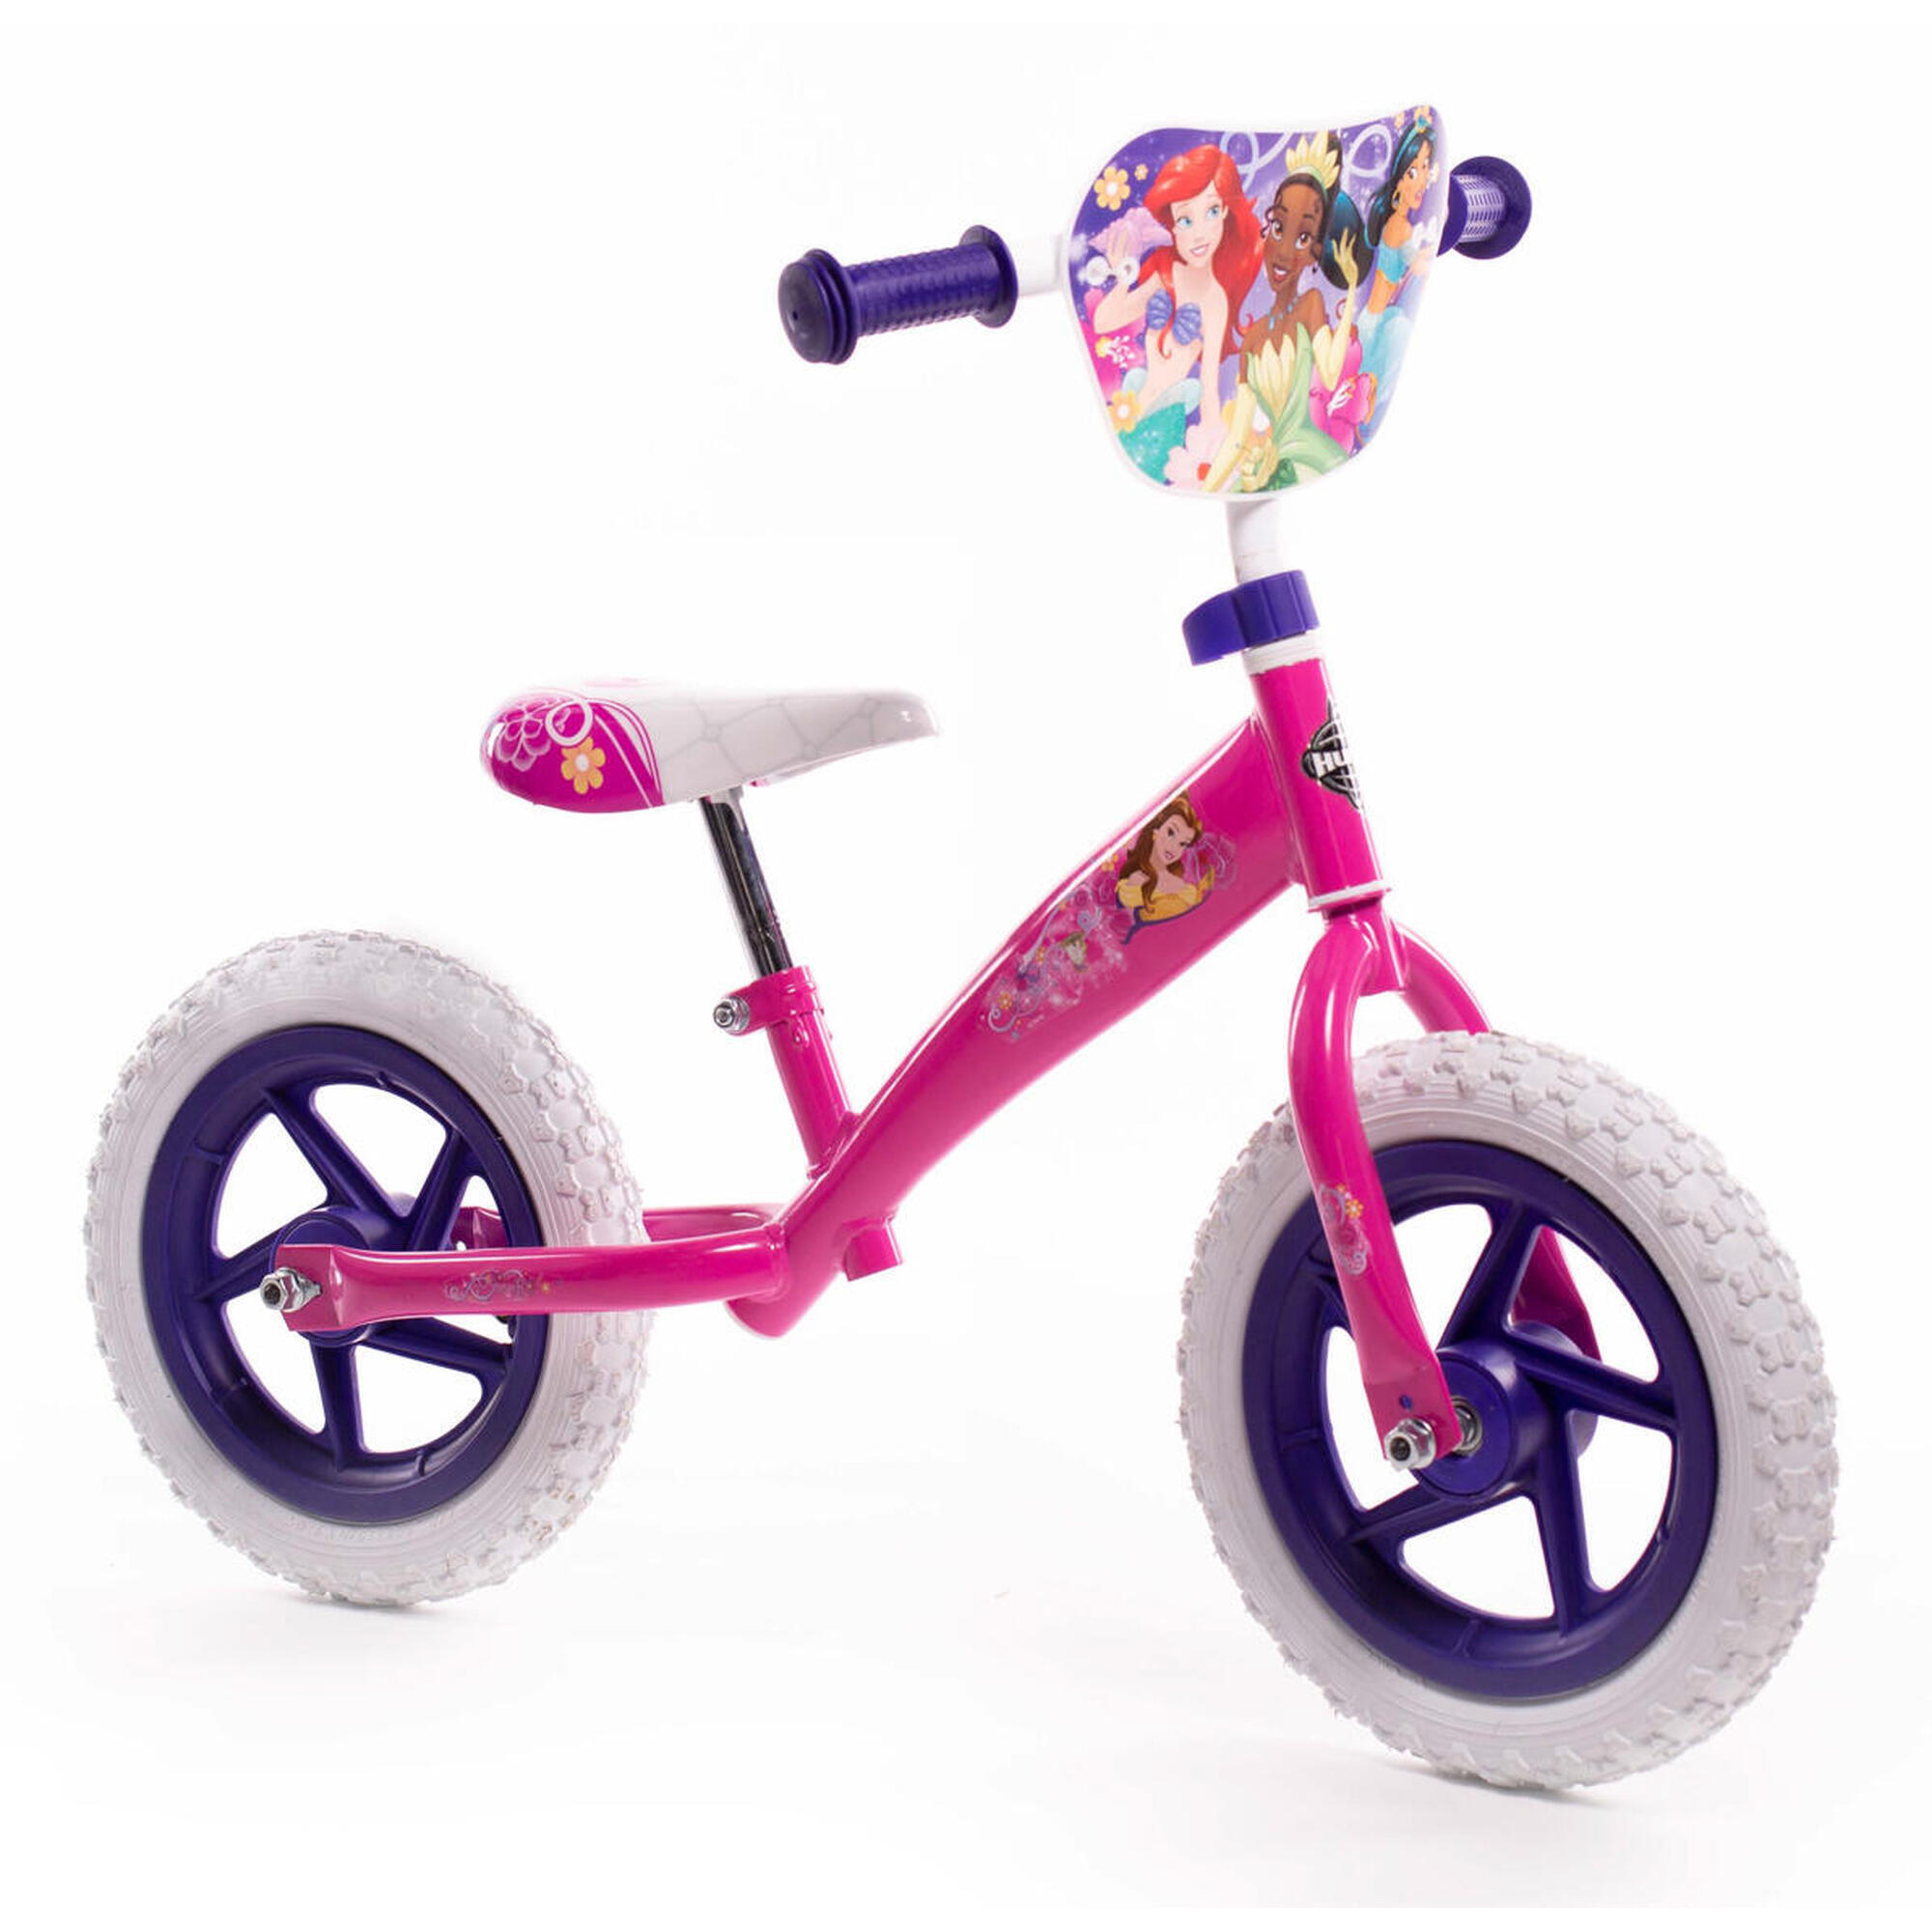 Huffy Disney Princess Balance Bike Pink 12 Inch Pink Toddler Bike For Girls 1/6